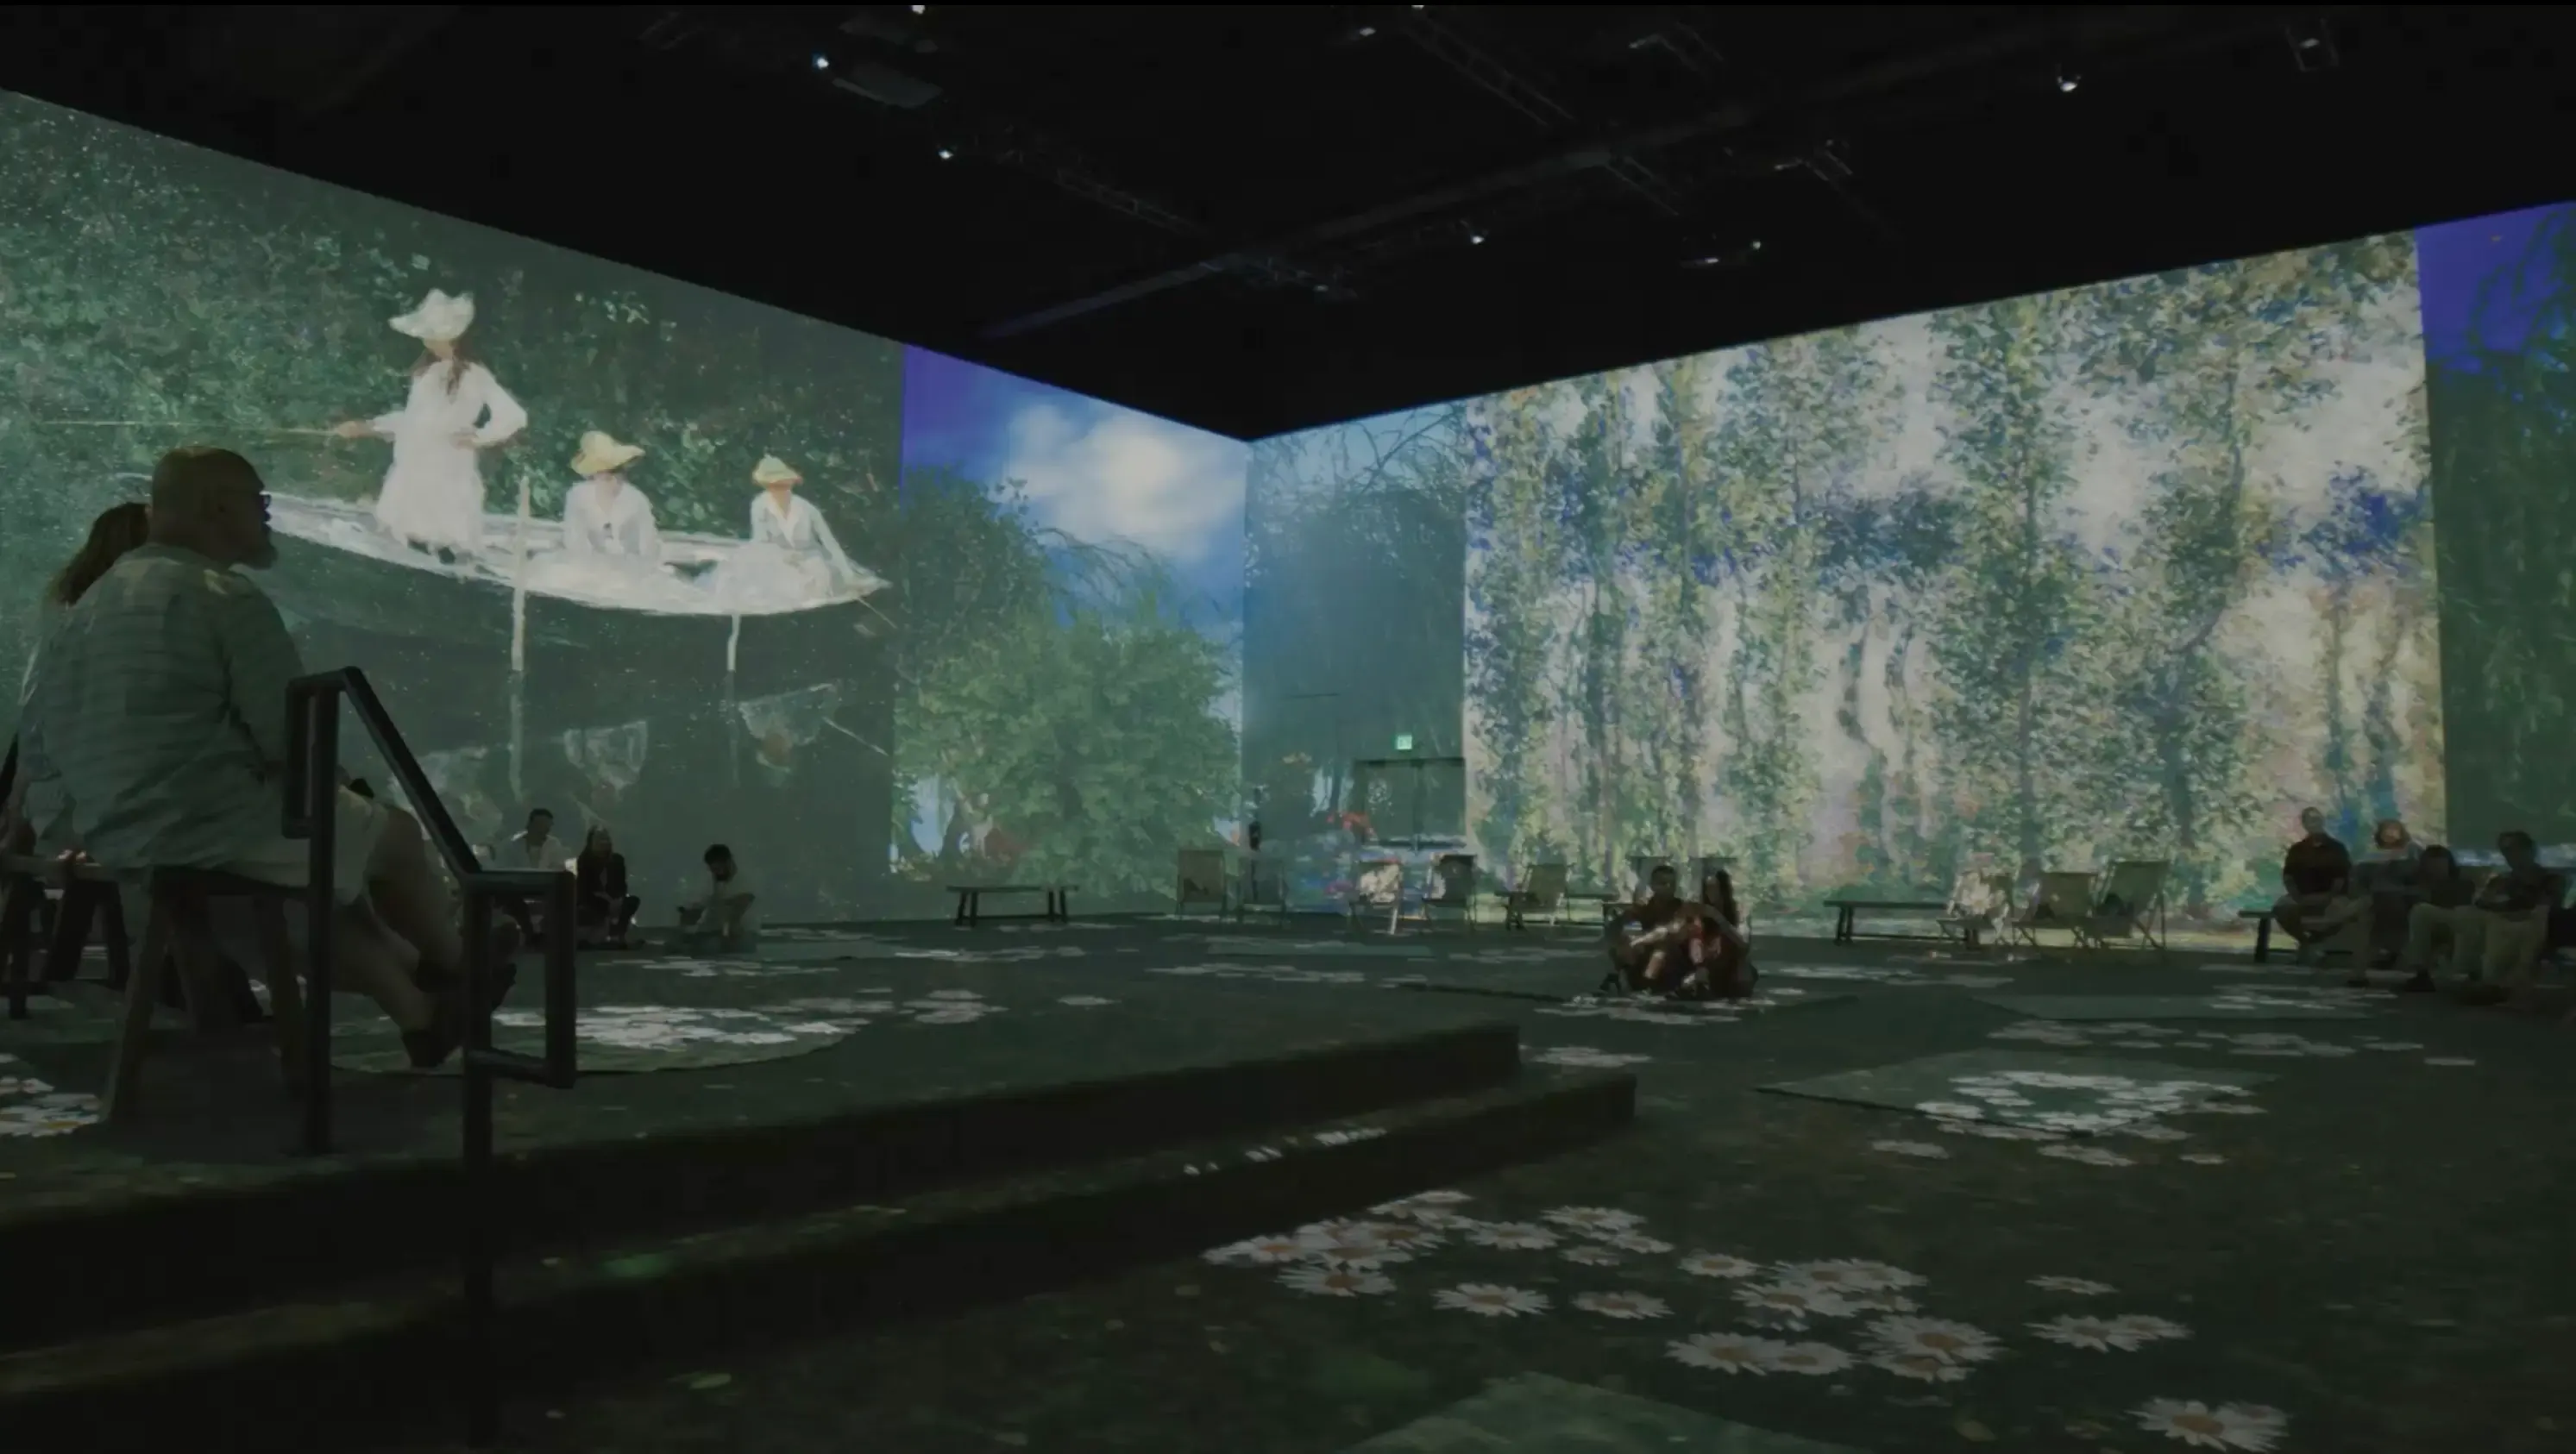 Claude Monet Exhibit in Cincinnati: The Immersive Experience